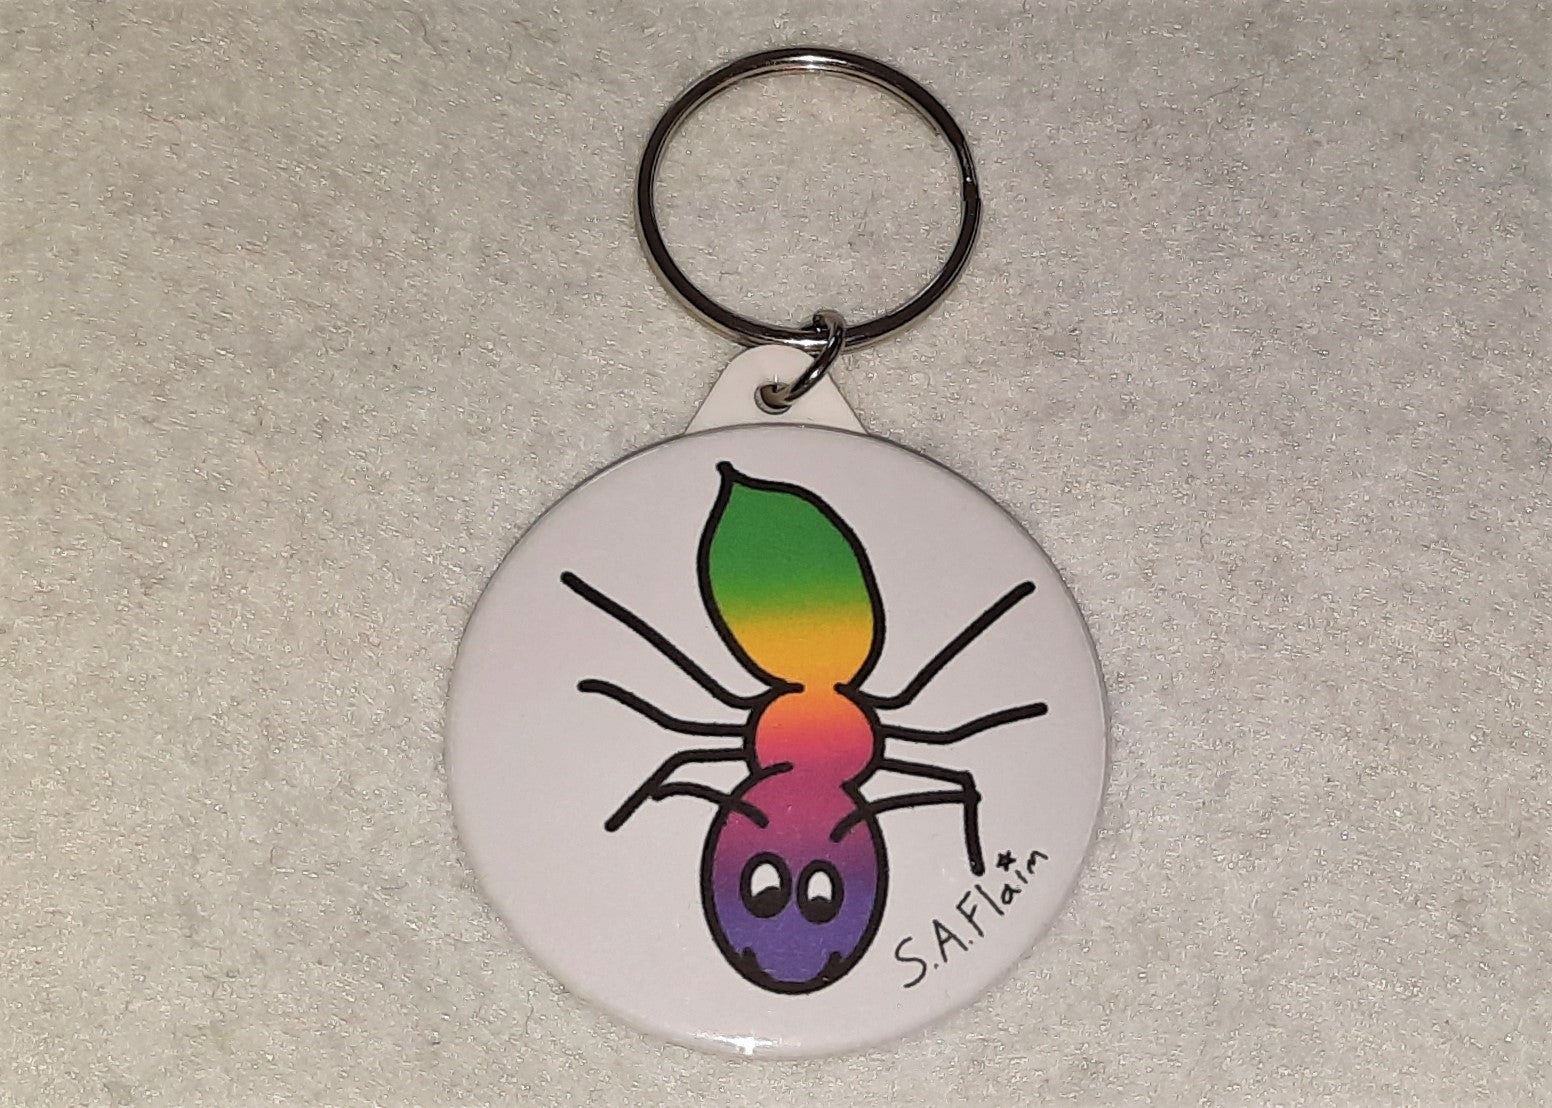 Sappho Lesbi-ant (Lesbian Ant) Keyring - Tully Crafts